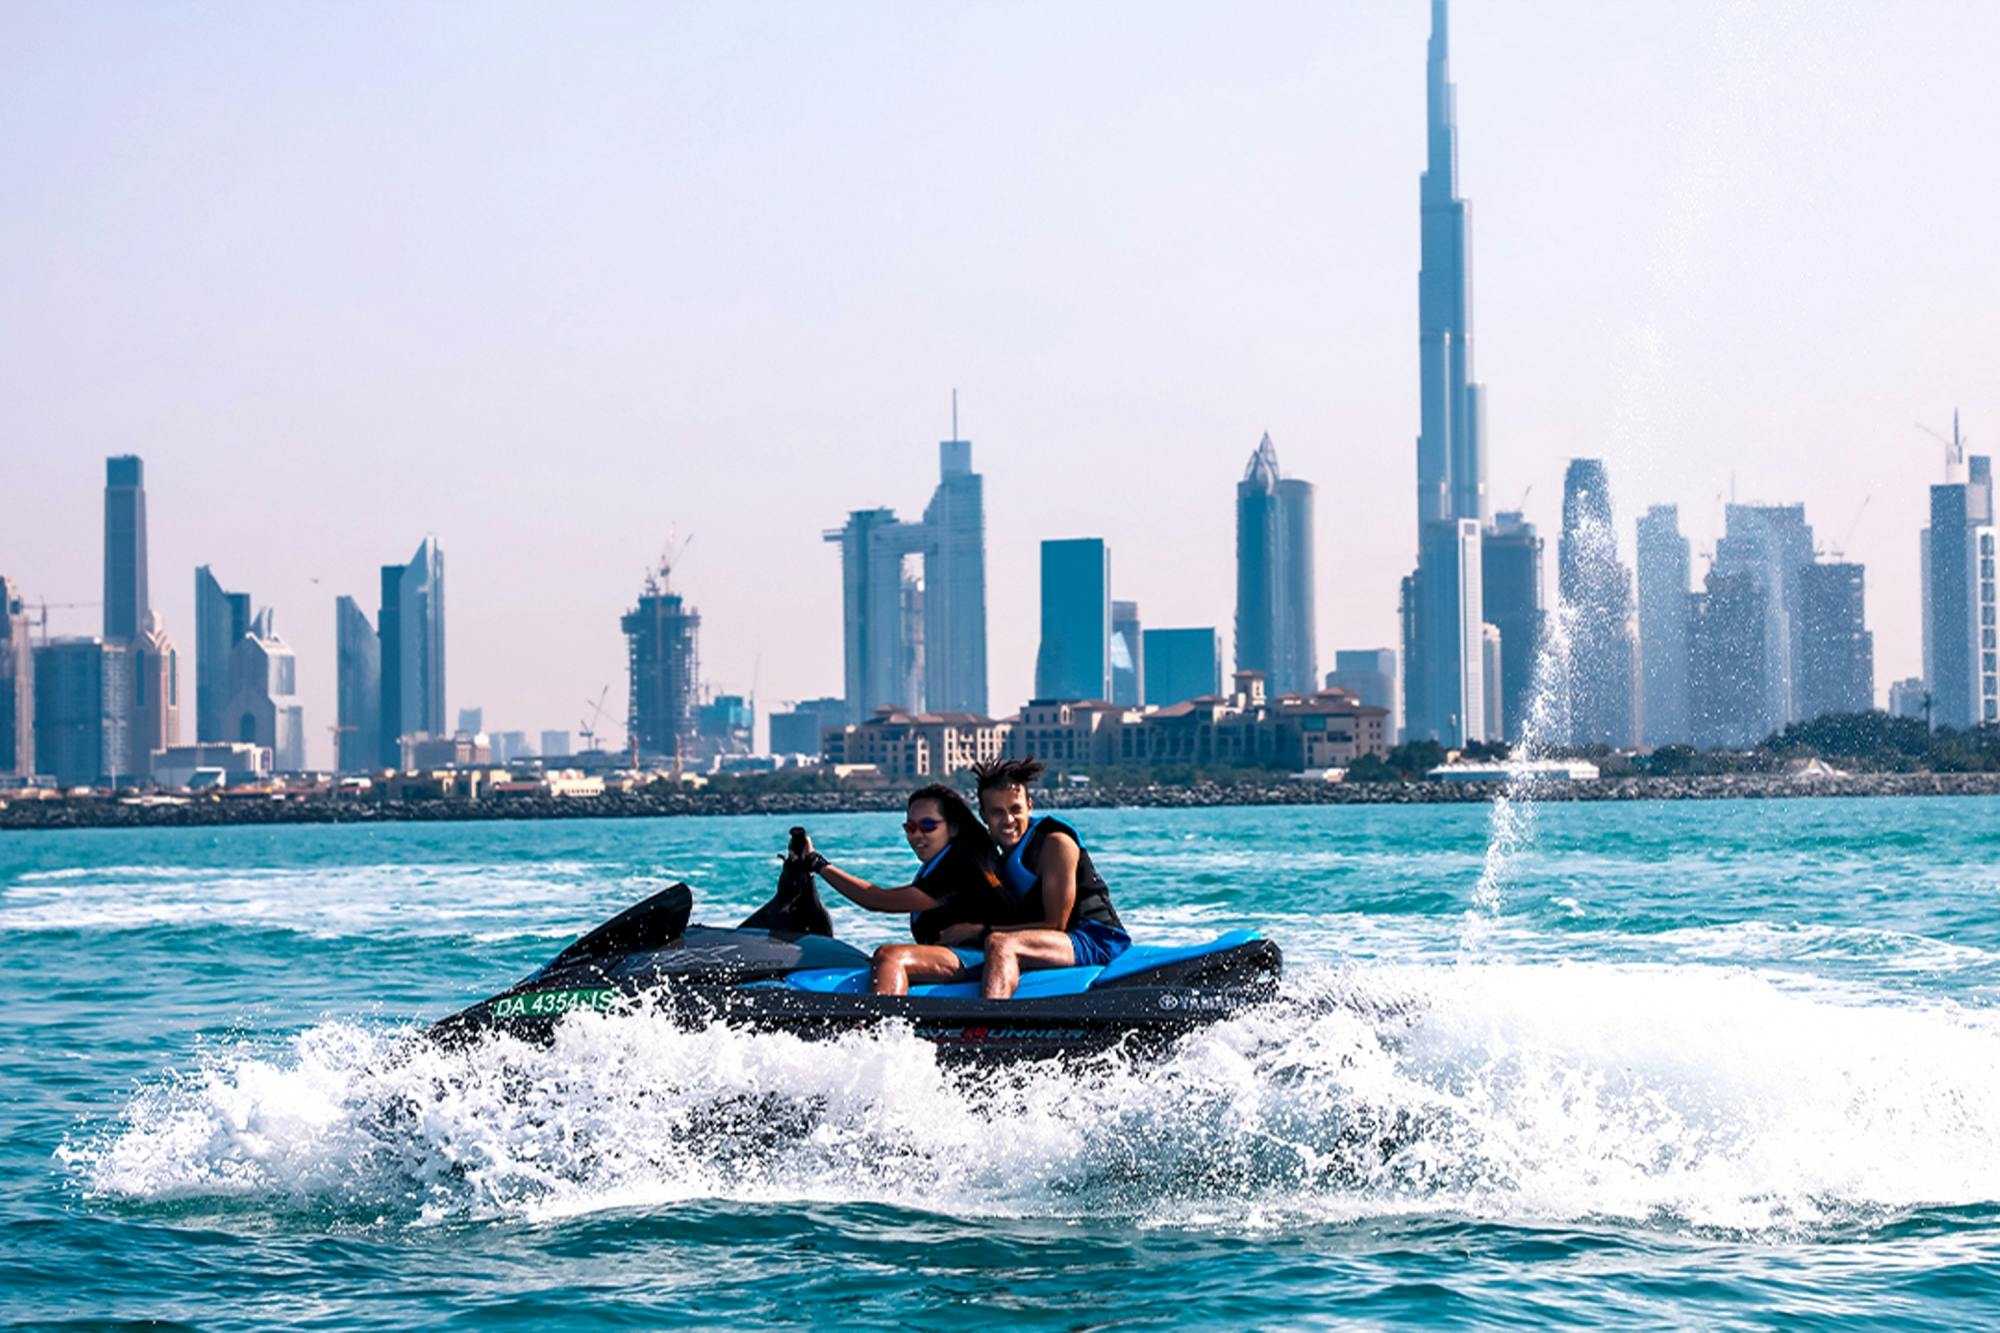 Jet ski ride with views of Burj Khalifa and Al Arab Musement